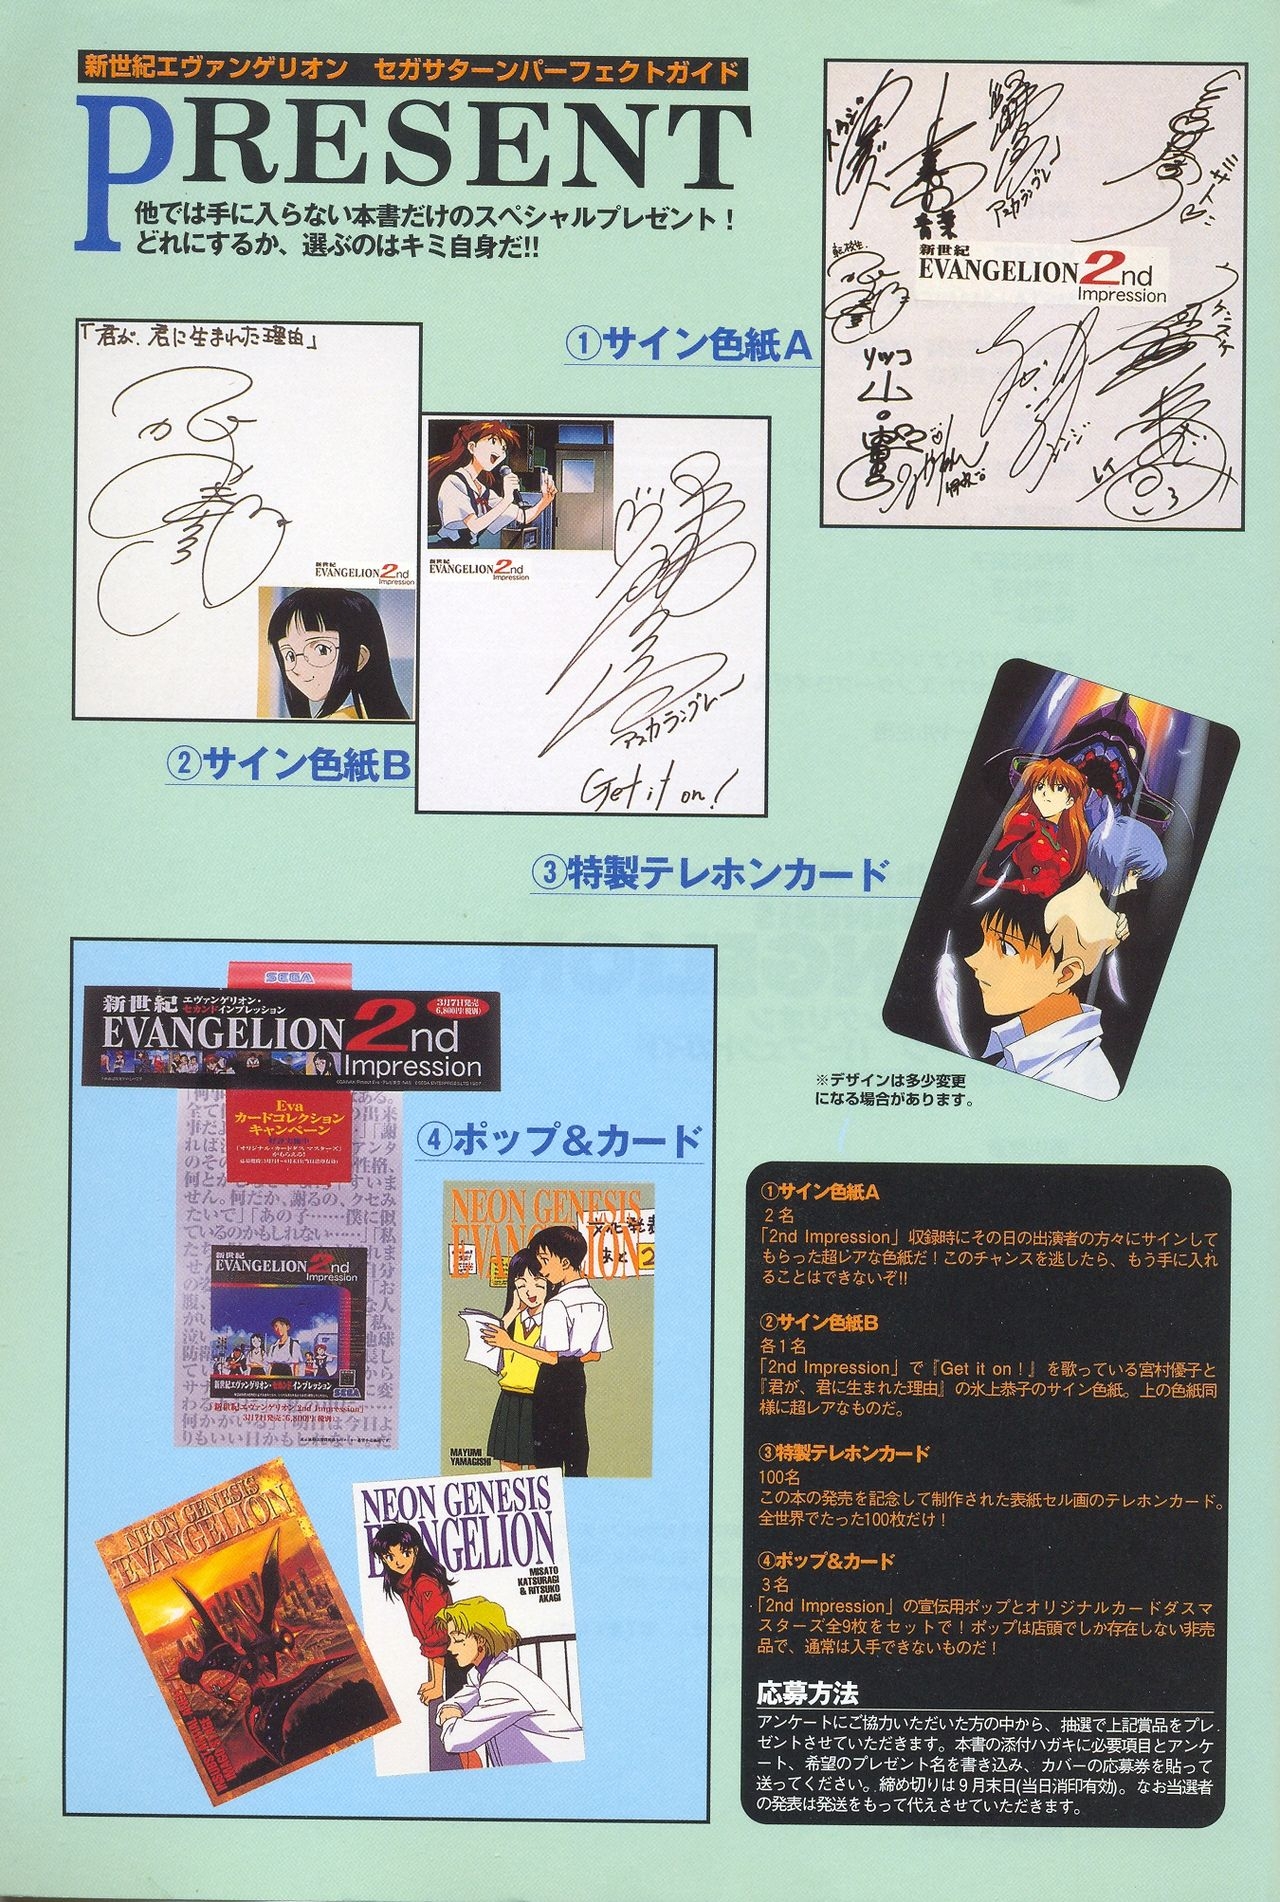 Neon Genesis Evangelion - 2nd Impression Sega Saturn Perfect Guide 174